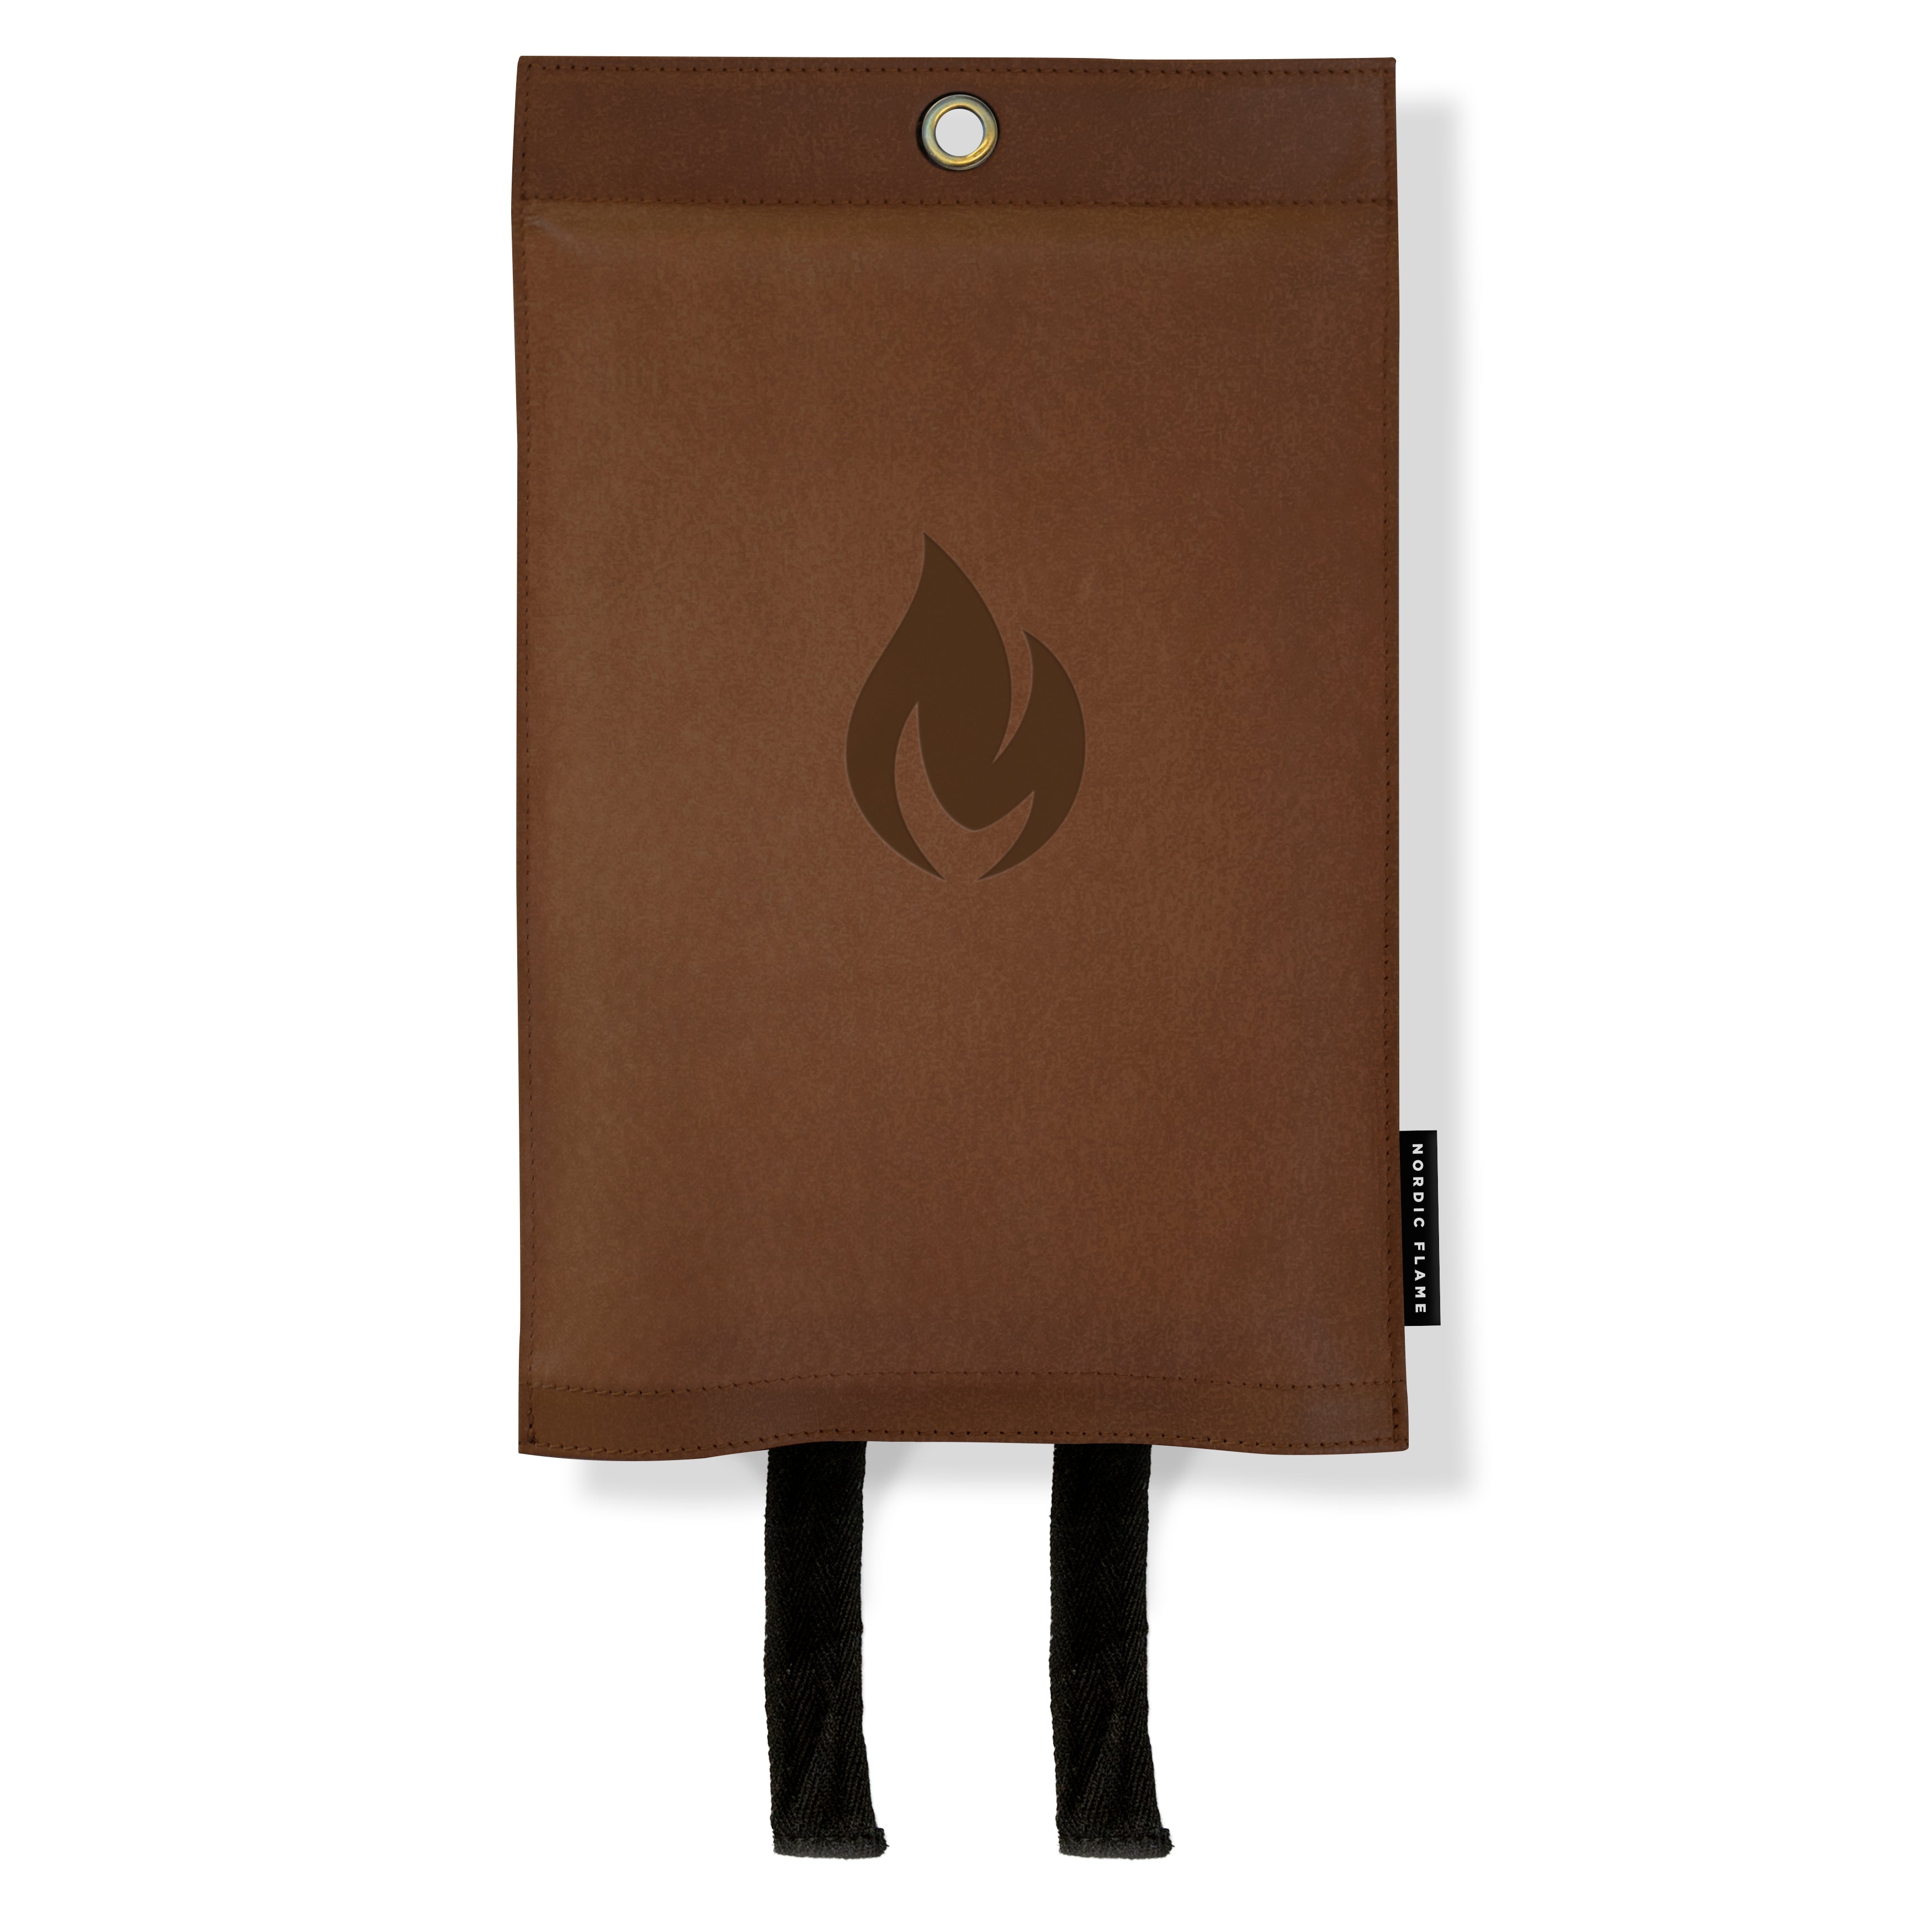 Fire Blanket - Leather dark brown